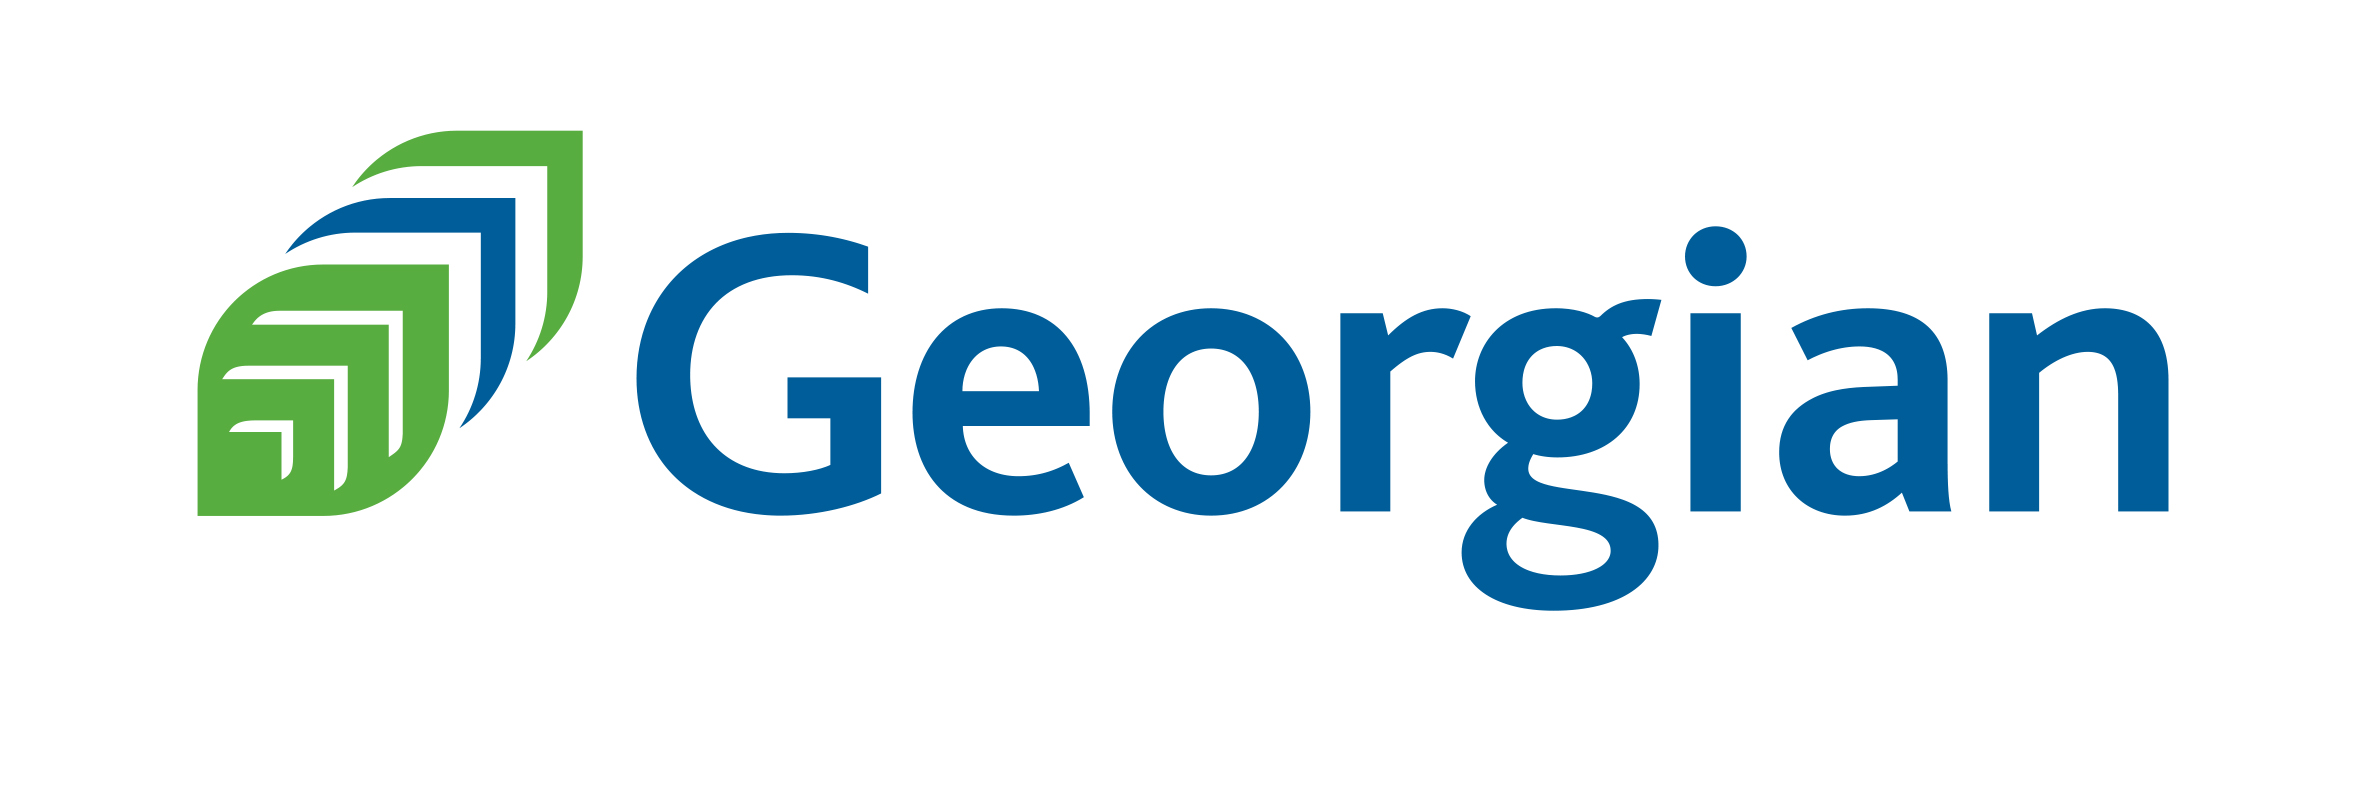 Georgian Logo Wallpaper